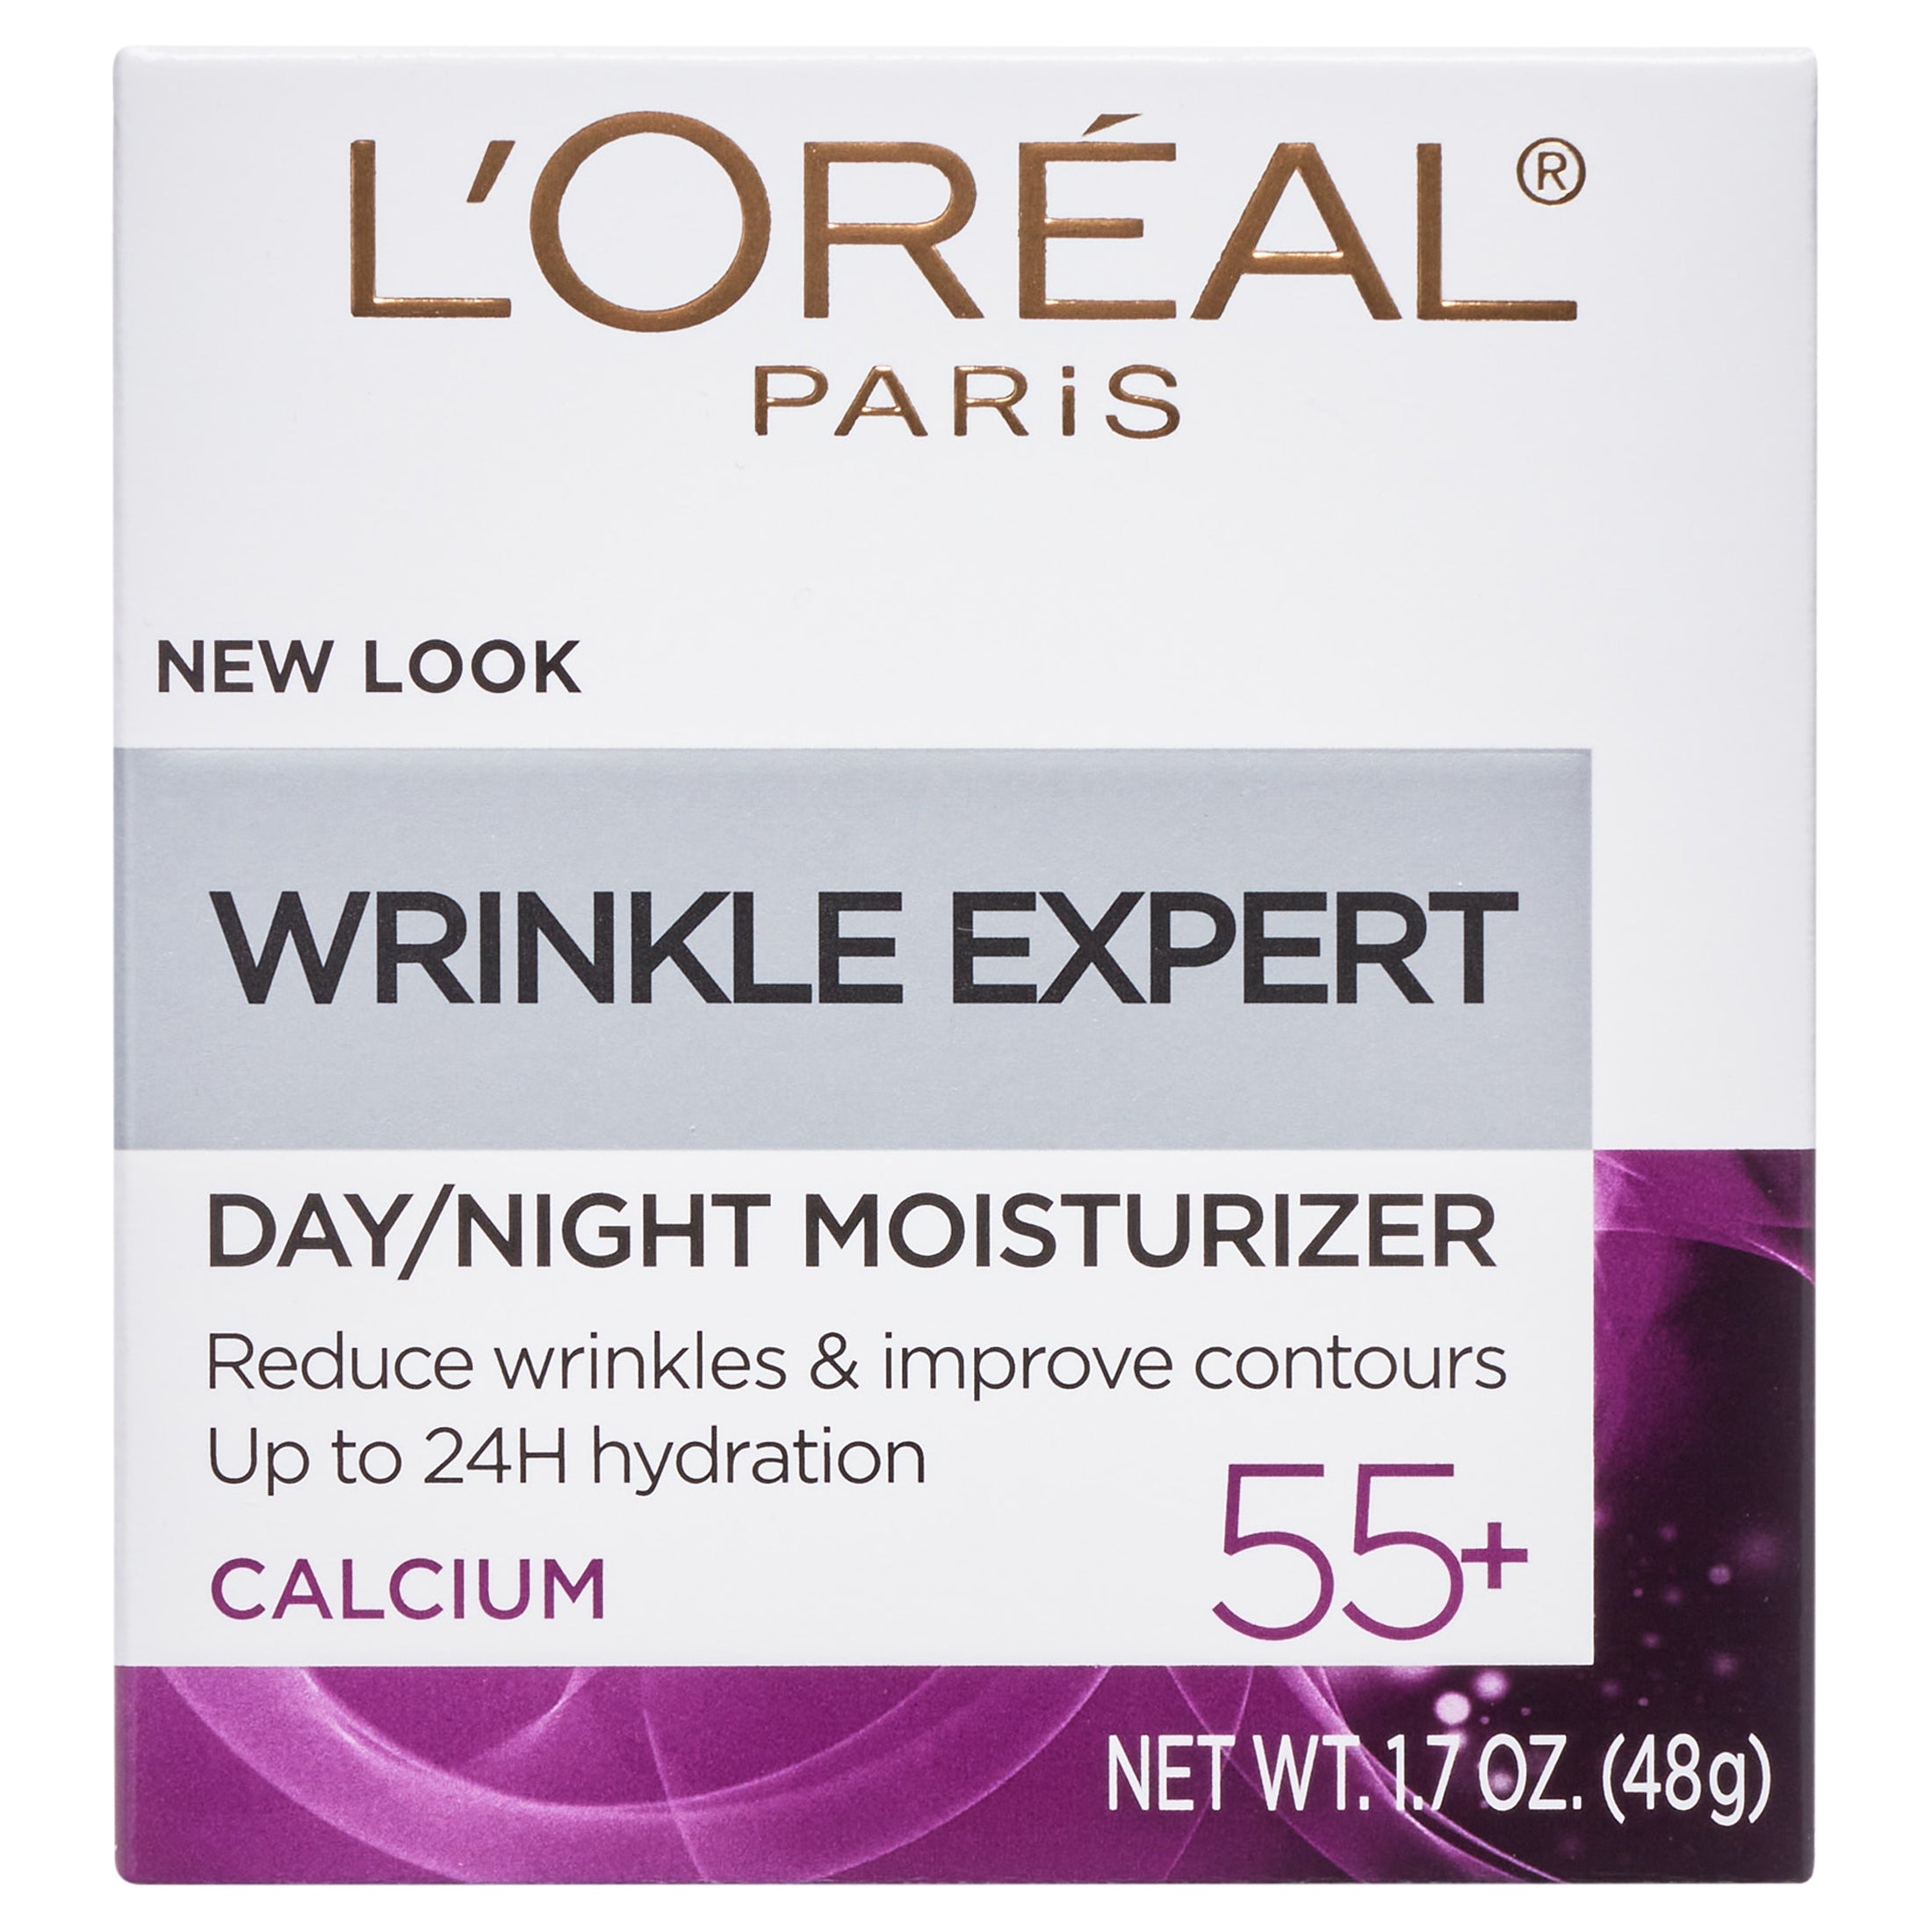 L'Oreal Paris Wrinkle Expert Face Moisturizer, 1.7 oz | MTTS408